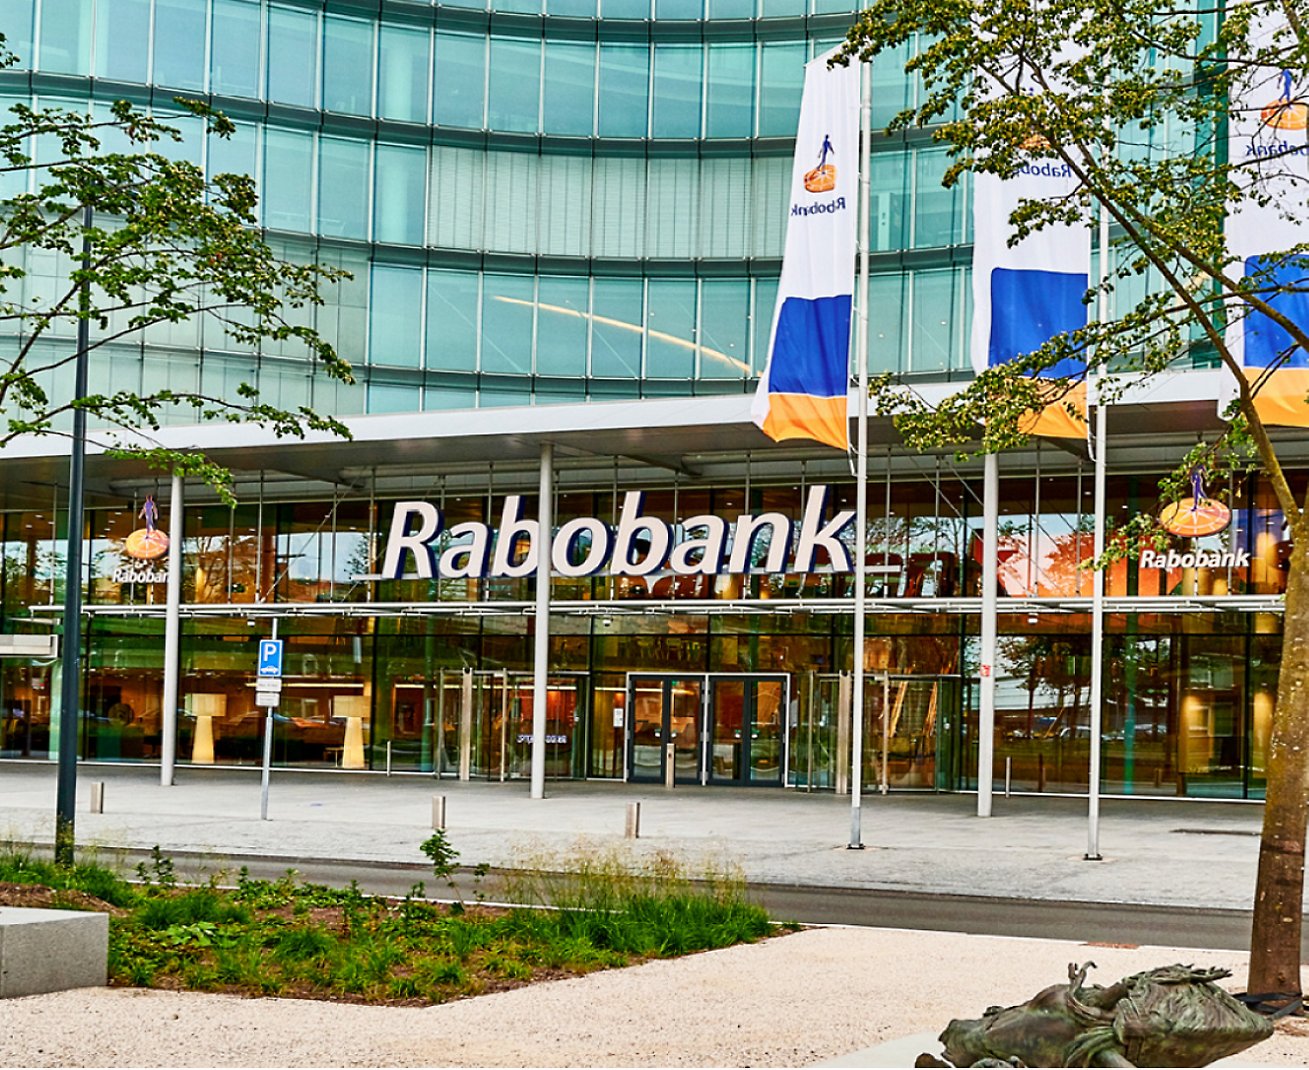 有 Rabobank 標誌的建築物。